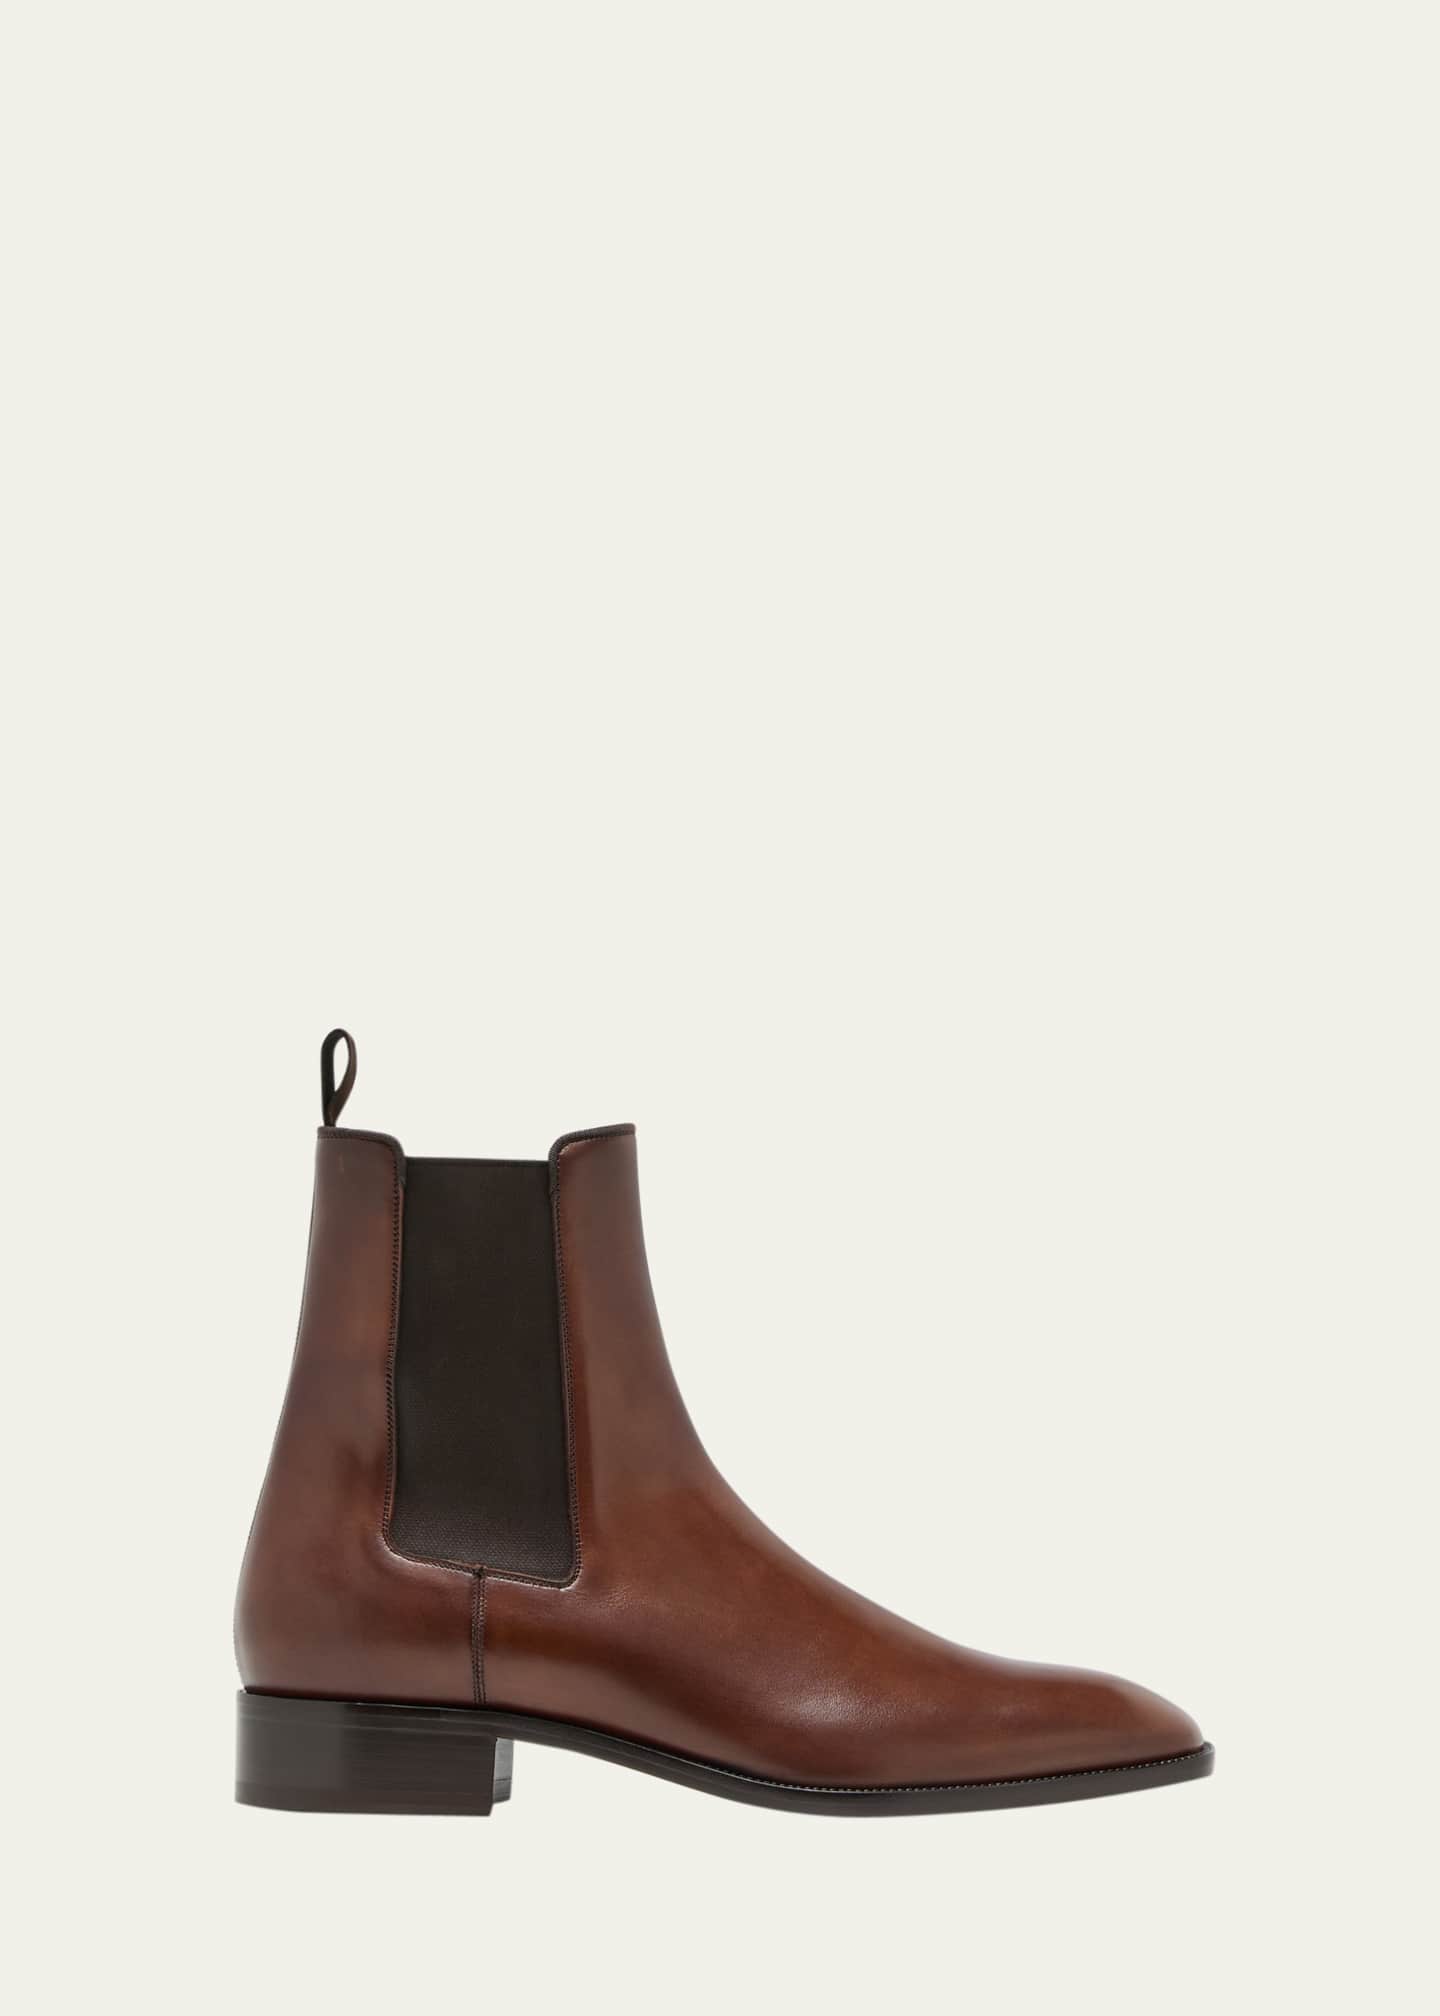 Christian Louboutin Samson Leather Boots - Brown - 41.5